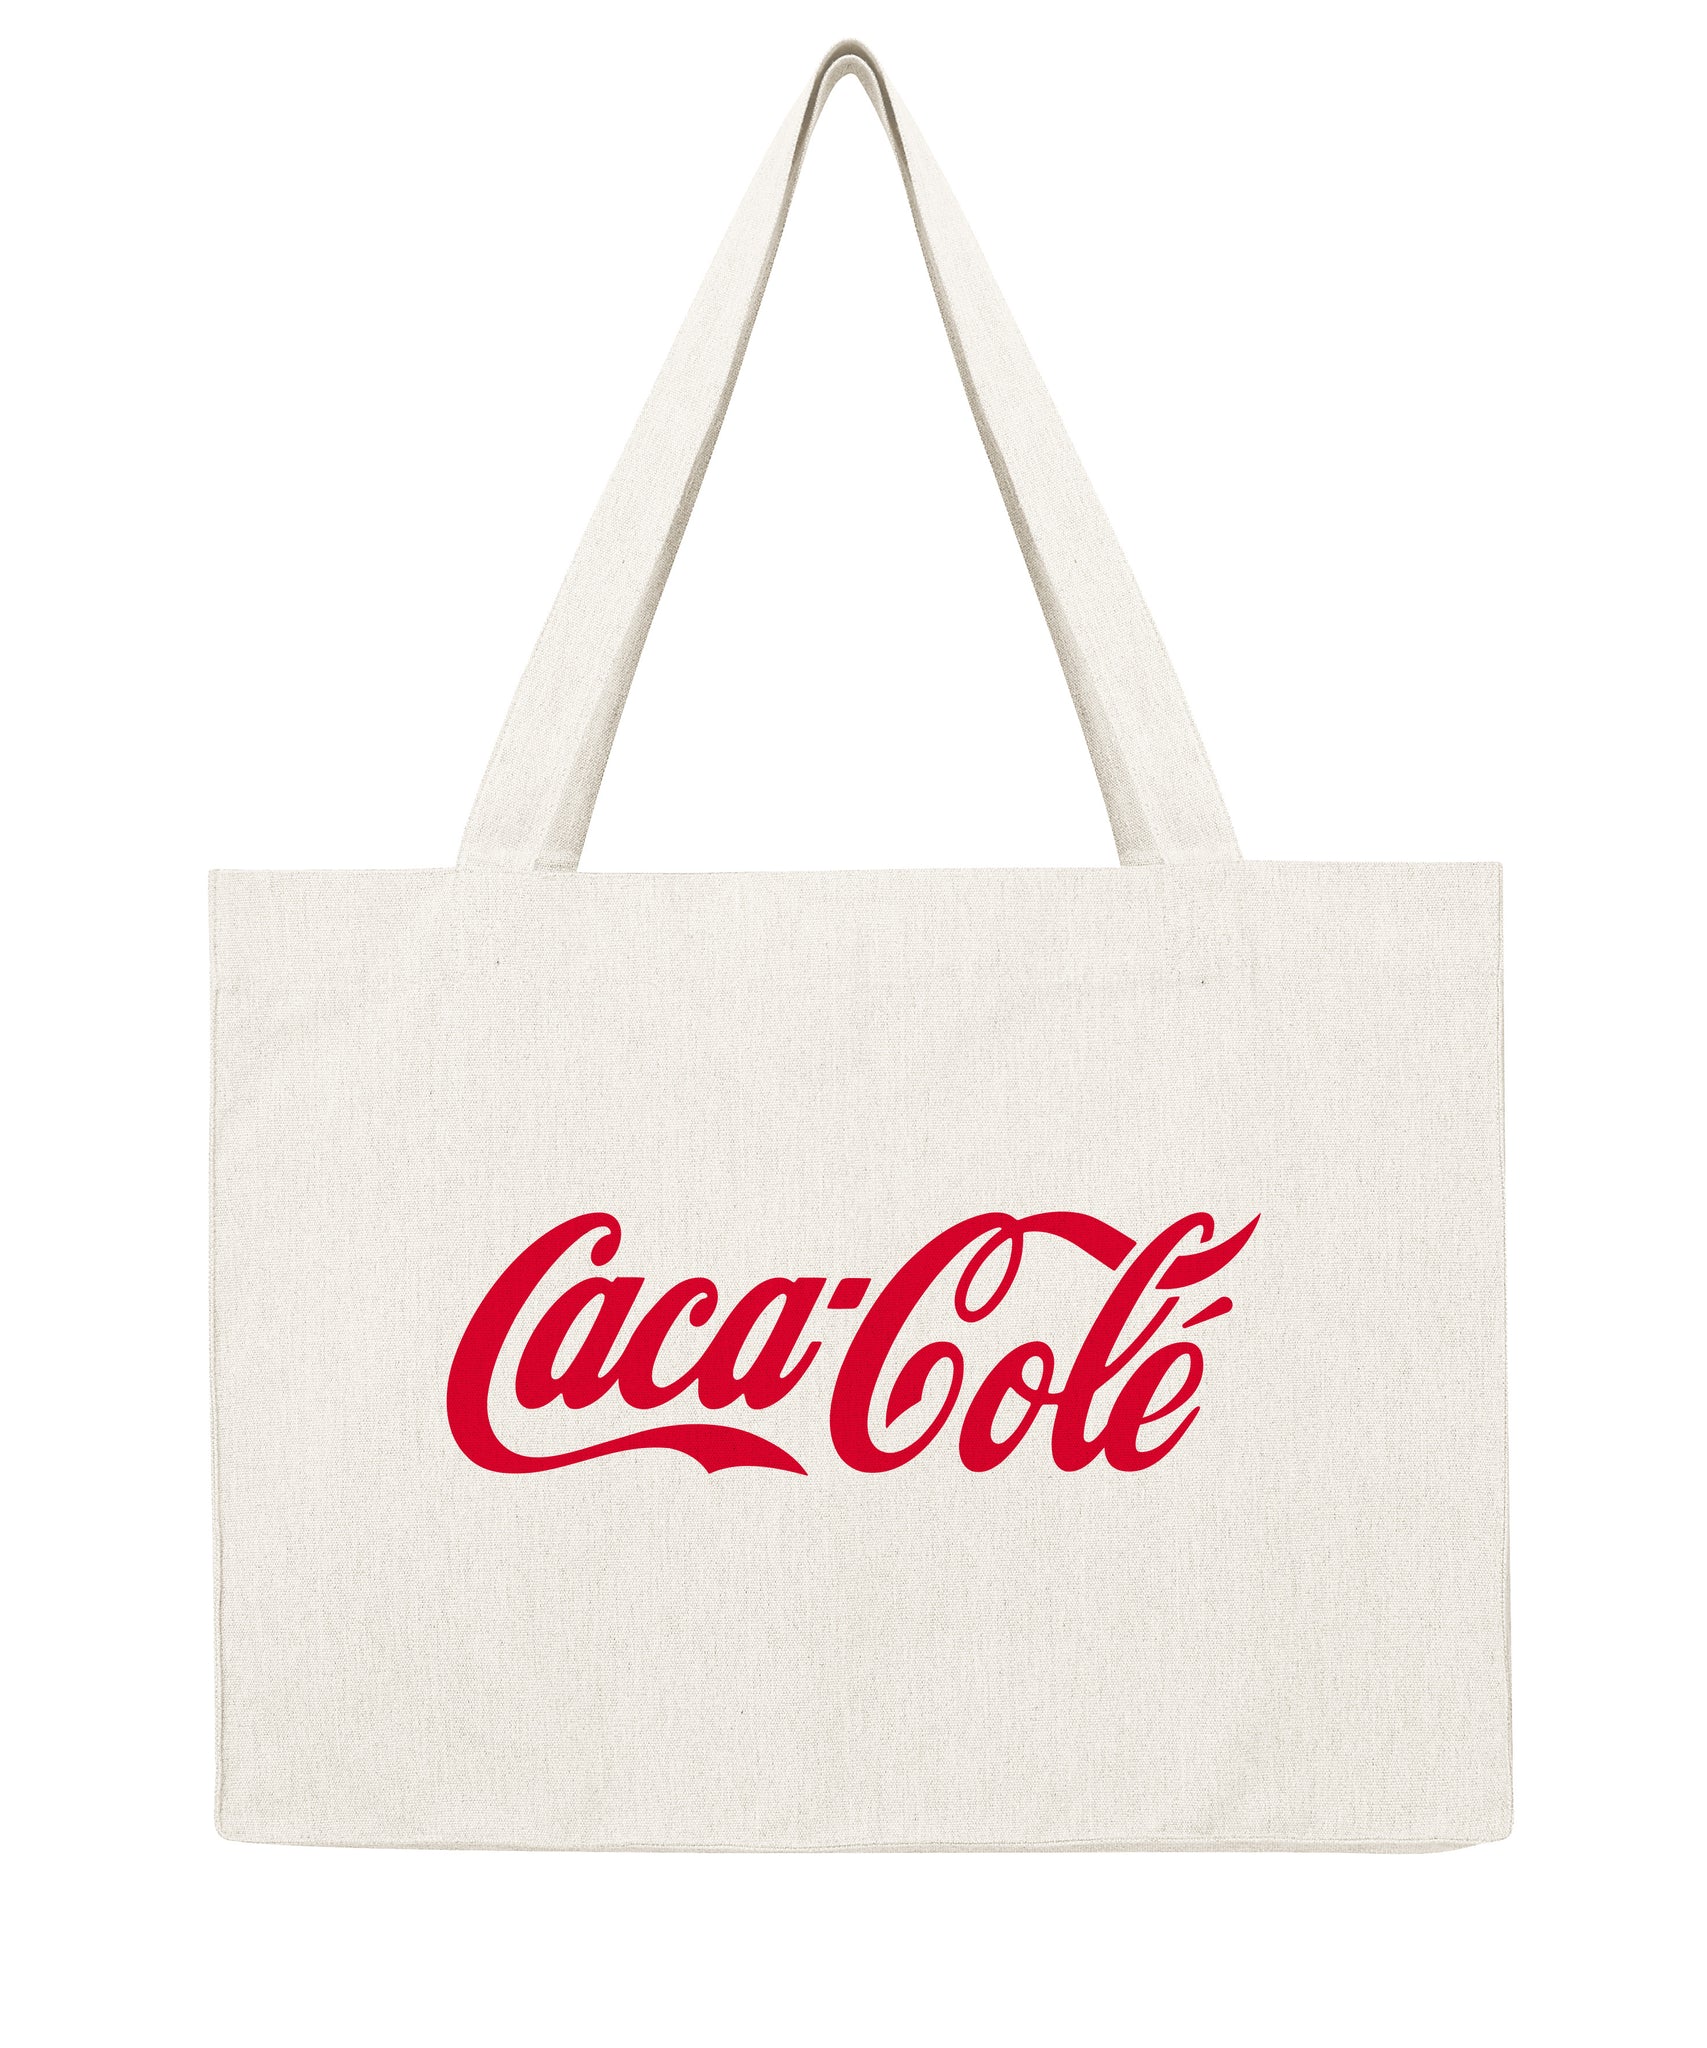 Caca Colé - Shopping bag-Sacs-Atelier Amelot